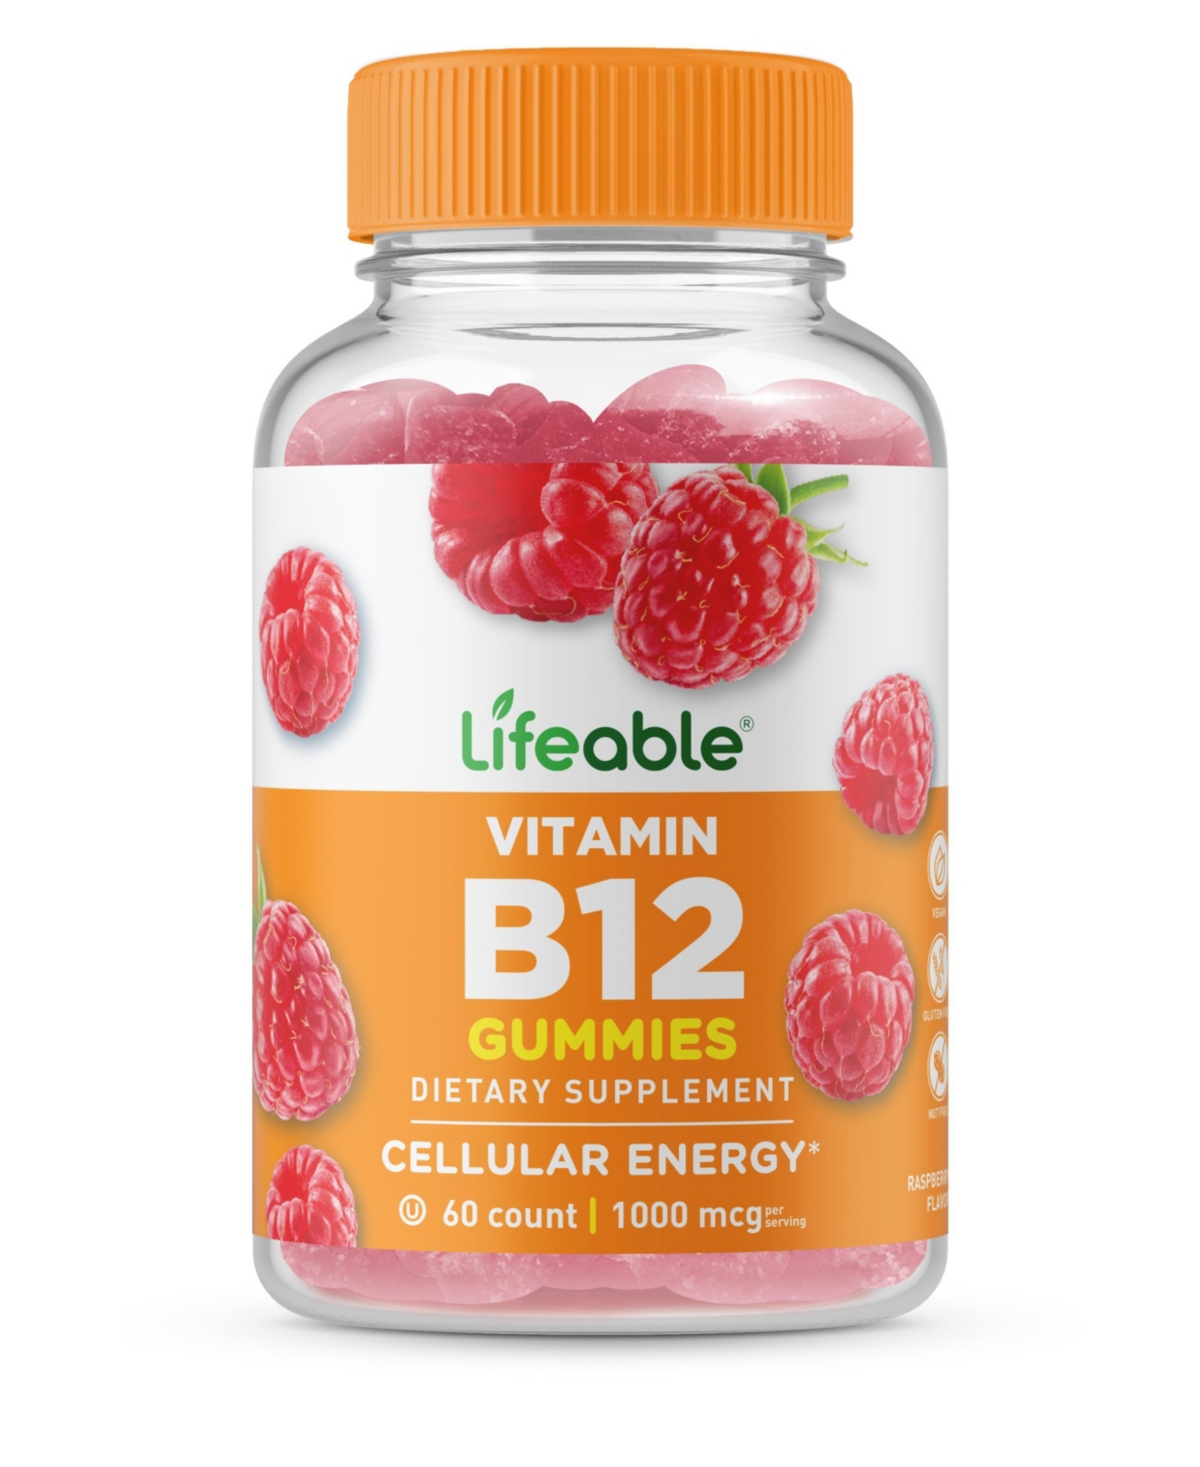 Vitamin B12 1,000 mcg Gummies - Energy, Mood, And Metabolism - Great Tasting Natural Flavor, Dietary Supplement Vitamins - 60 Gummies - Open